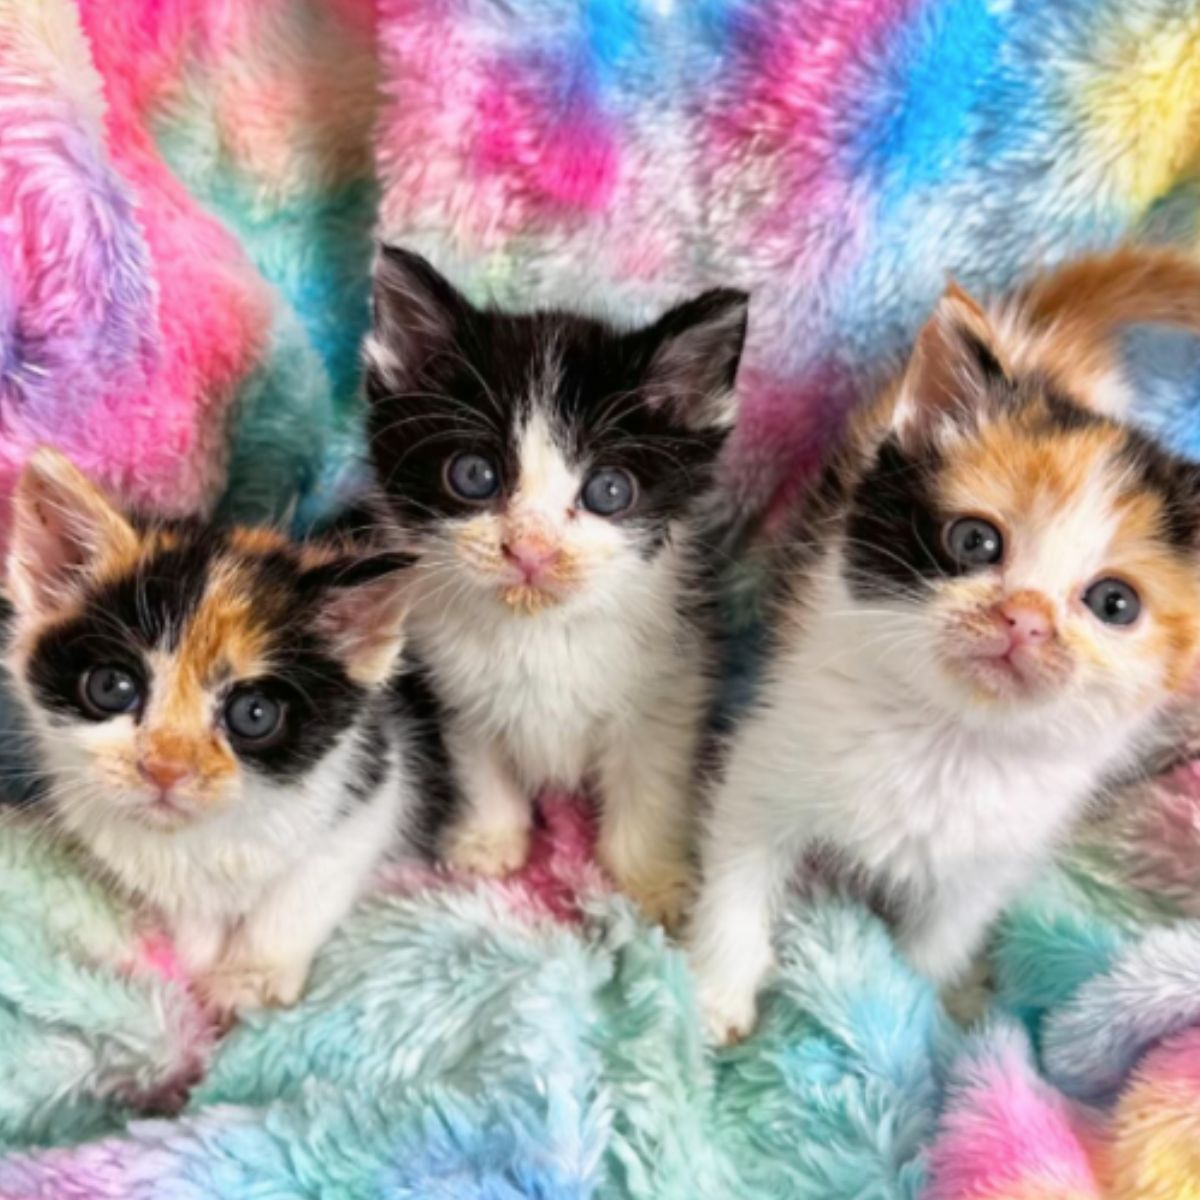 kittens on colorful blanket